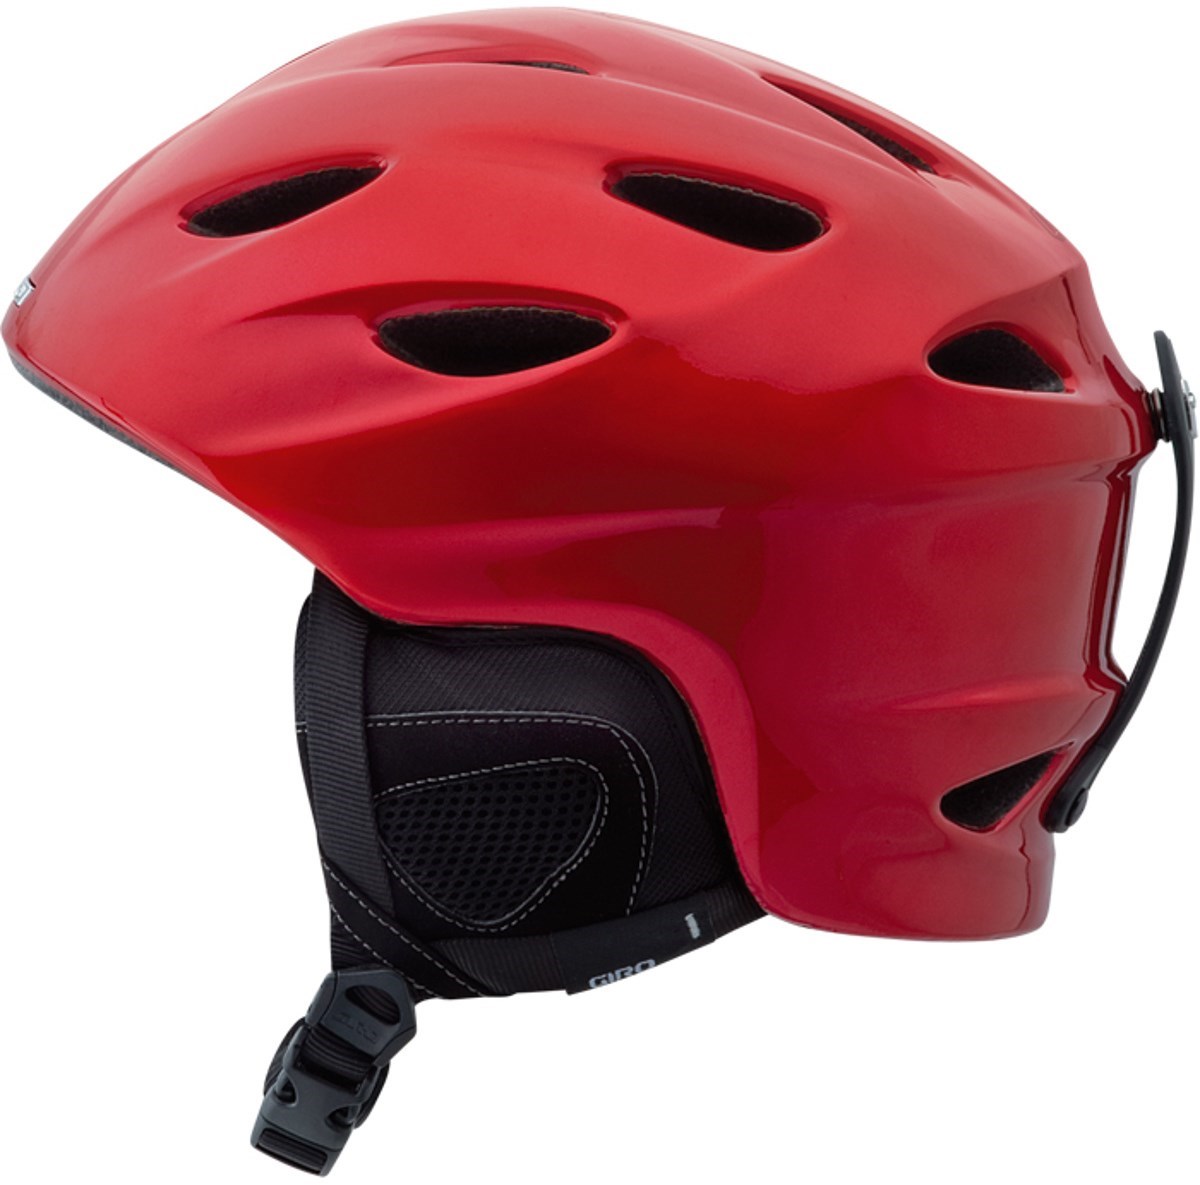 Giro G9 Snowboard Helmet product image